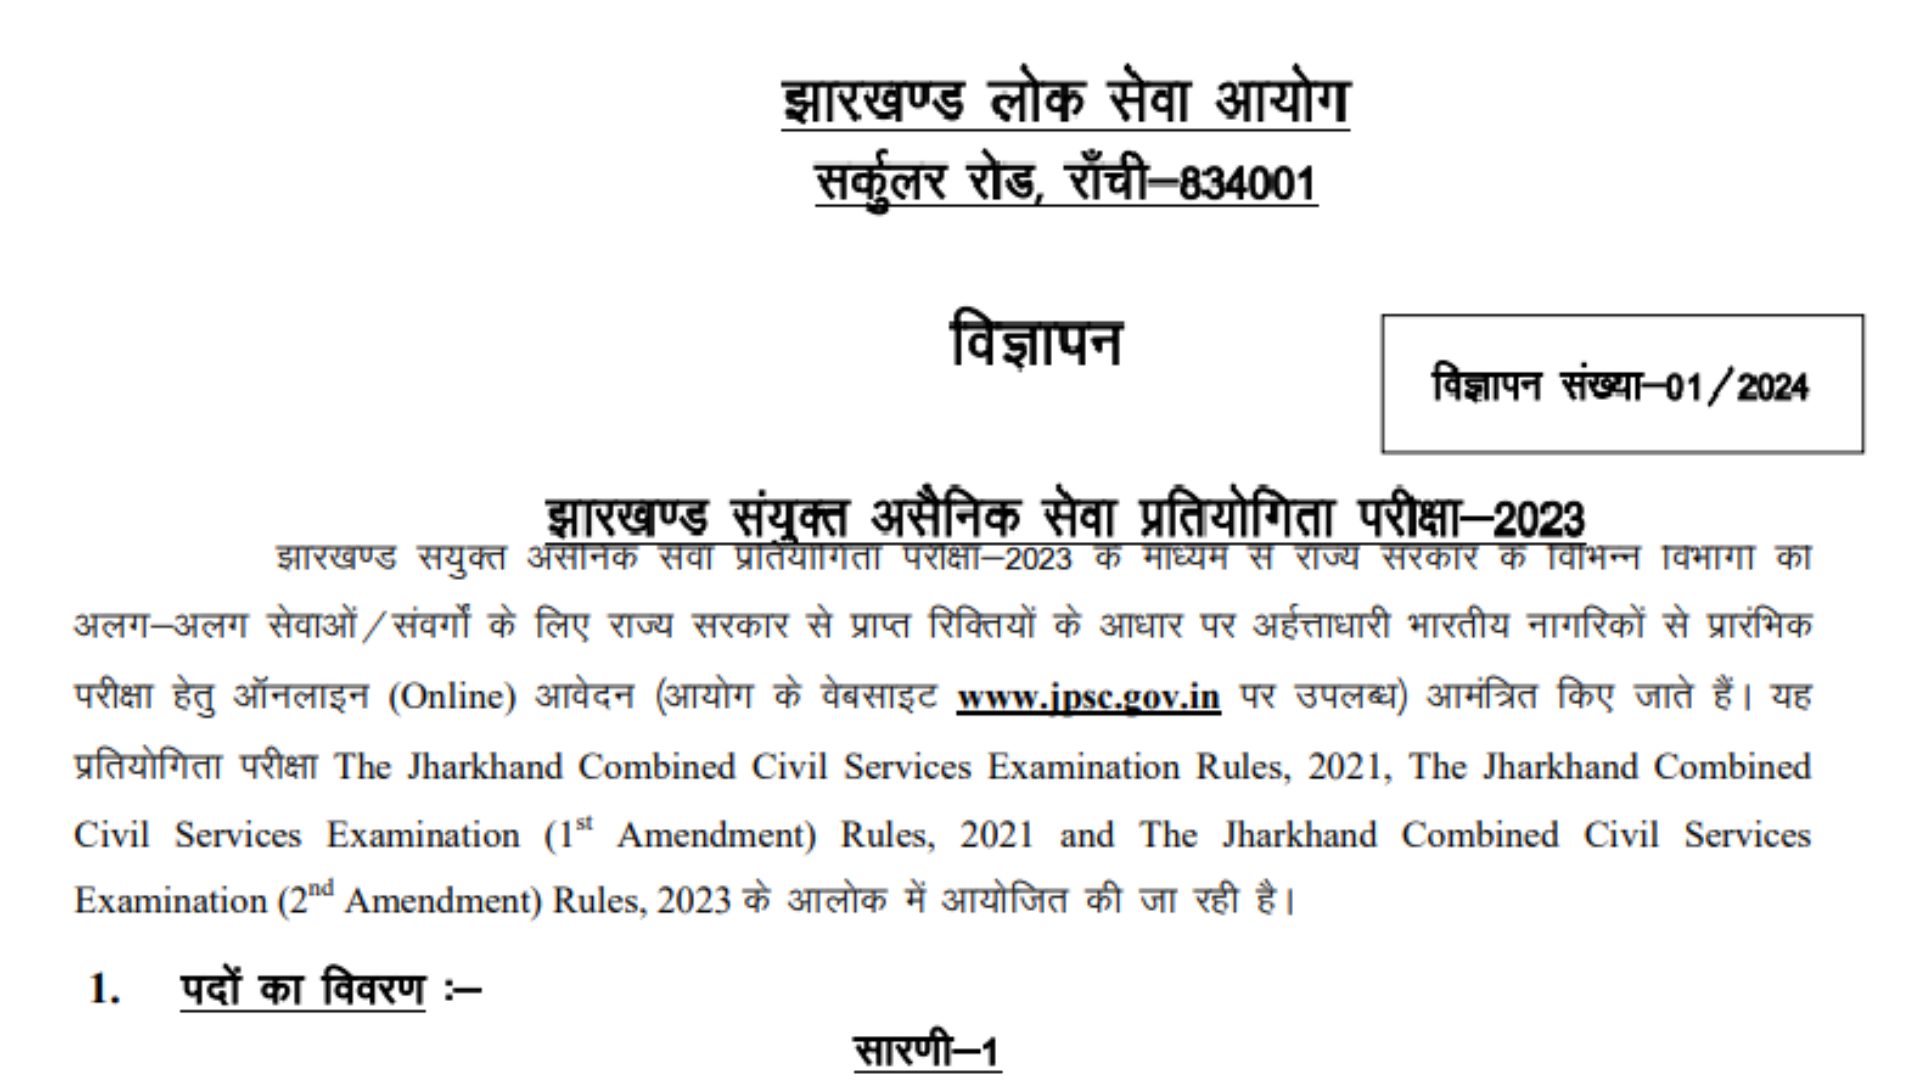 Jharkhand JPSC Civil Services Exam Advt No. 01/2024 Recruitment 2024 Apply Online for 342 Post